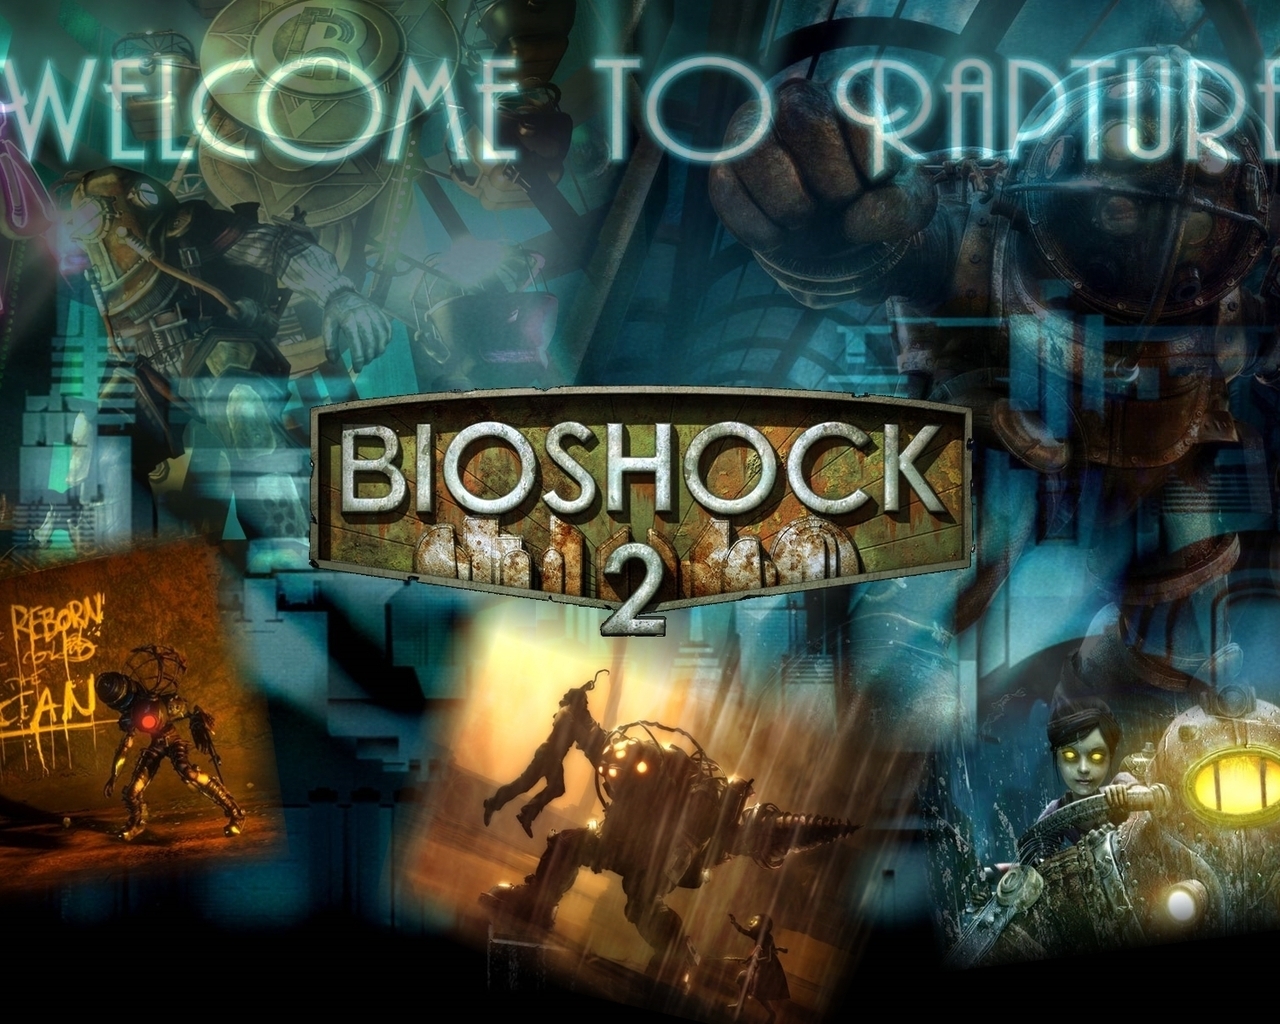 Bioshock 2 for 1280 x 1024 resolution